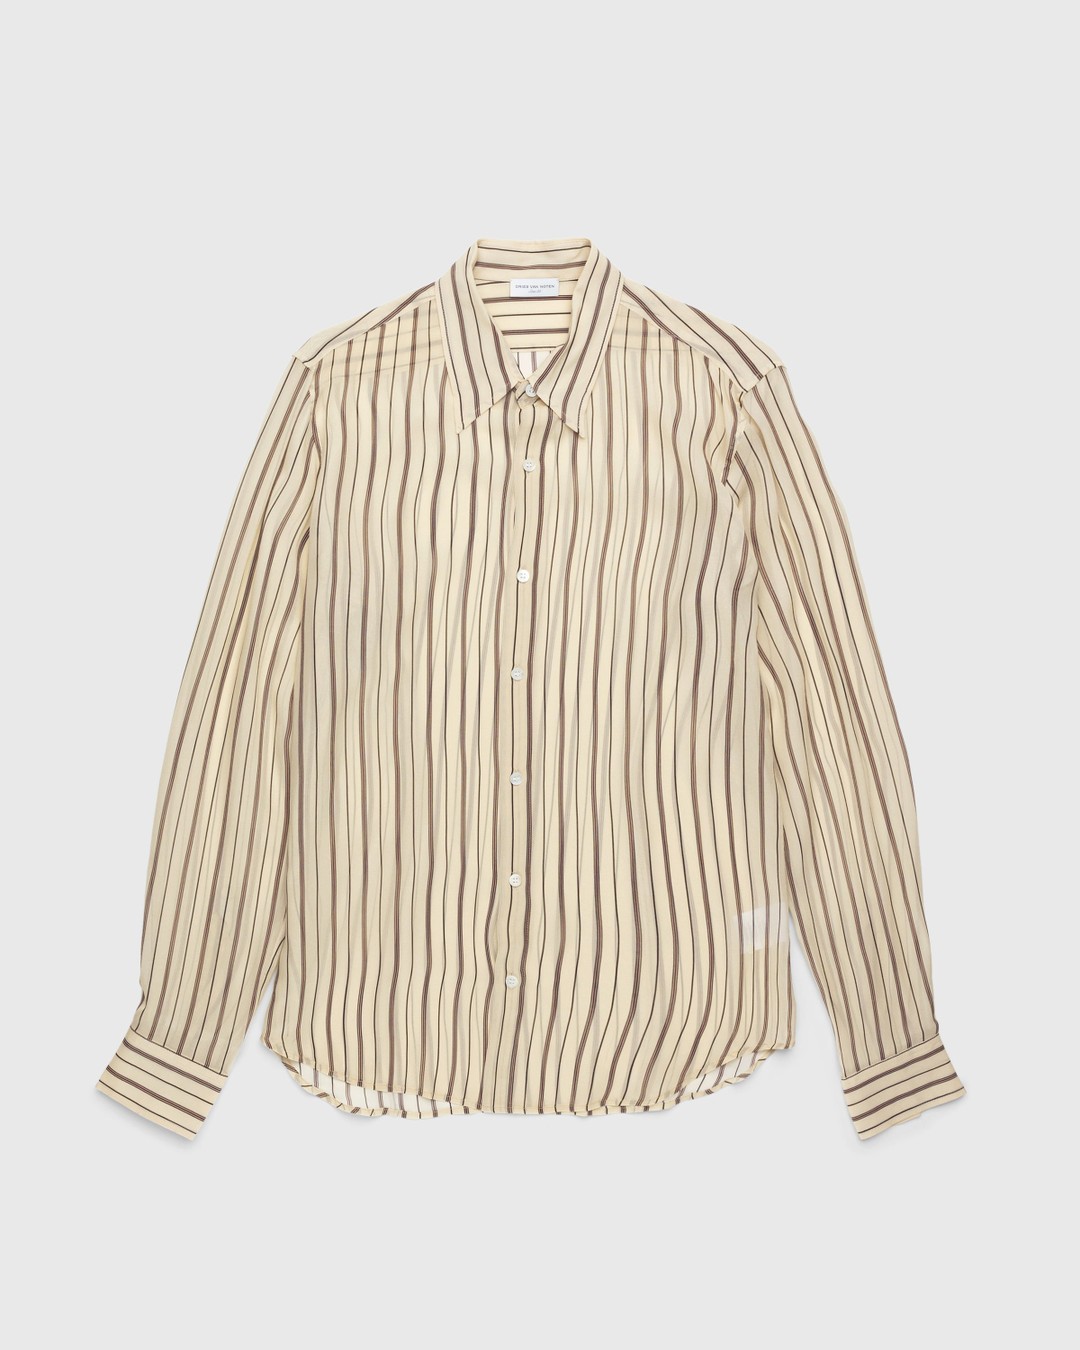 Dries van Noten – Celdon Shirt Ecru - Longsleeve Shirts - Beige - Image 1